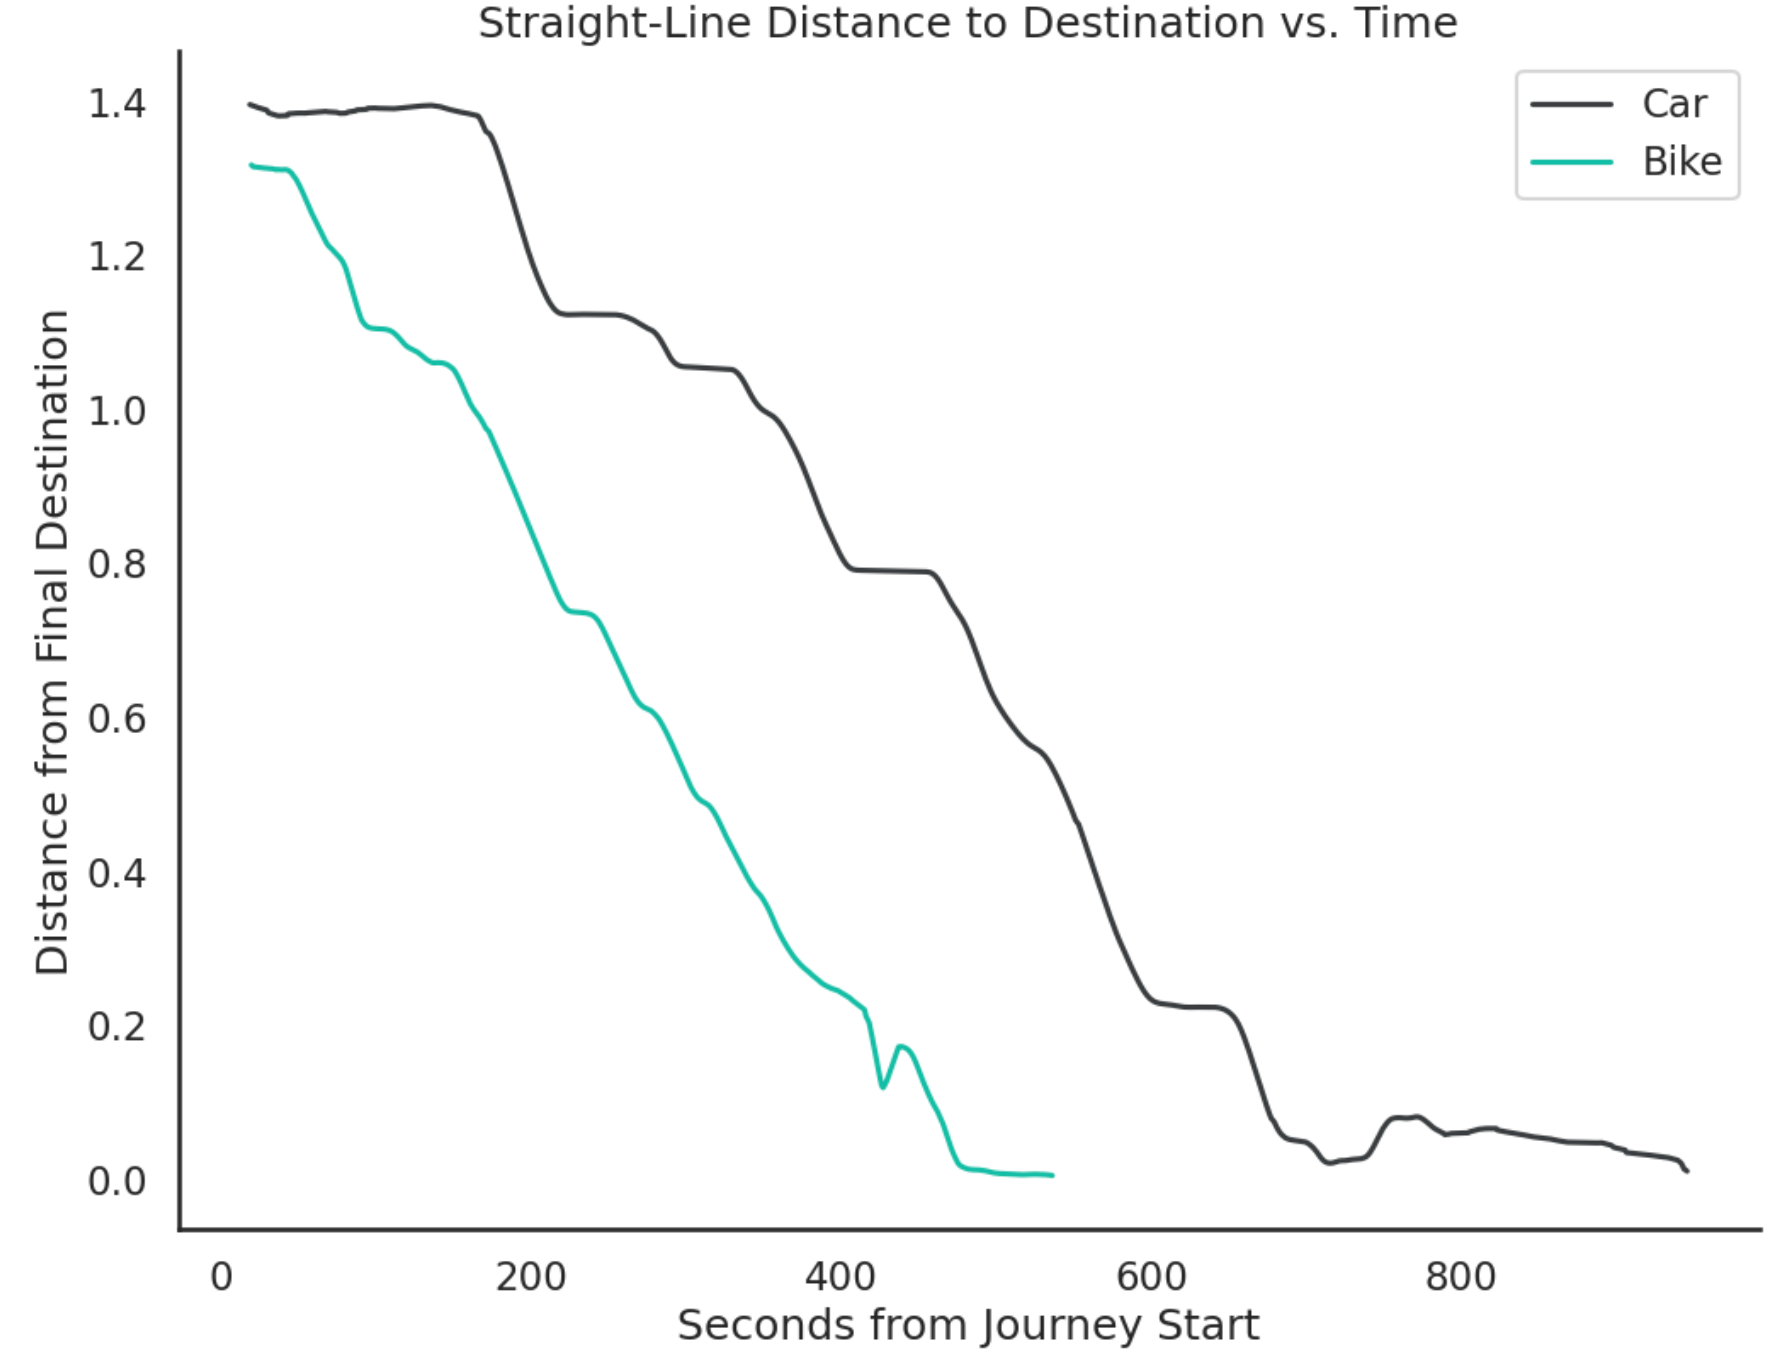 Bike vs. Car Distance to Destination over Time